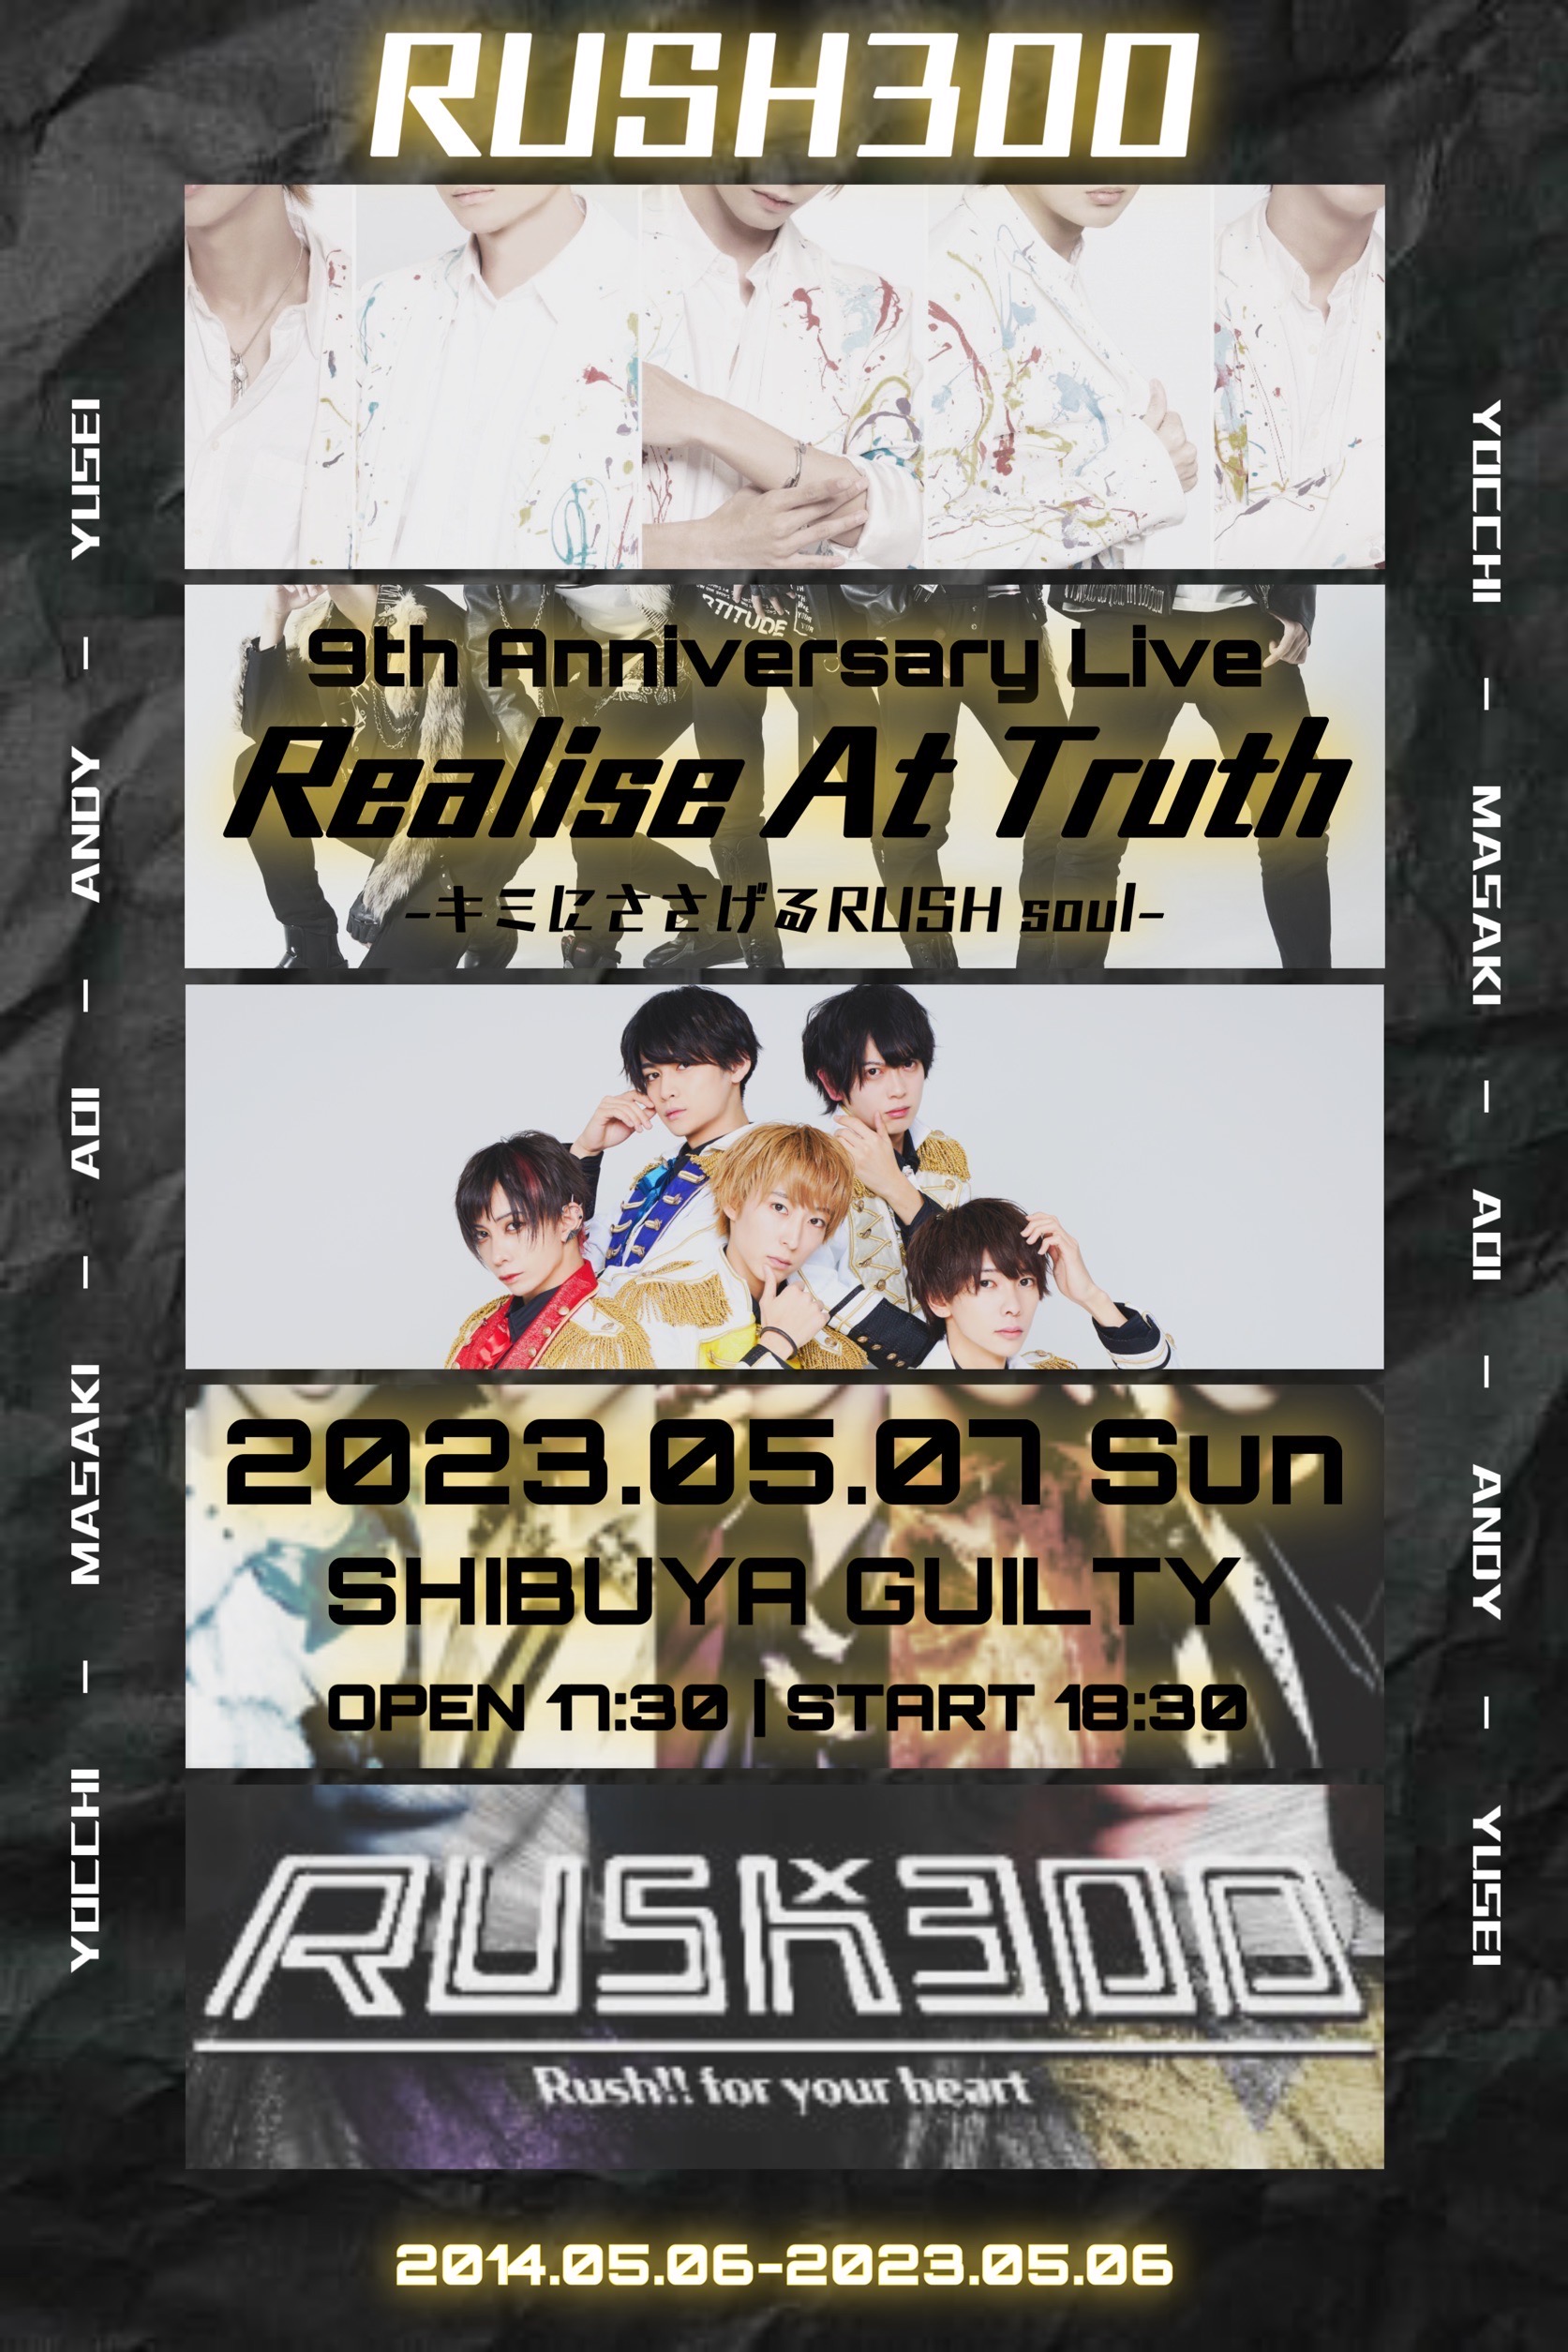 RUSH300 9th Anniversary Live Realise At Truth-キミにささげるRUSH soul-